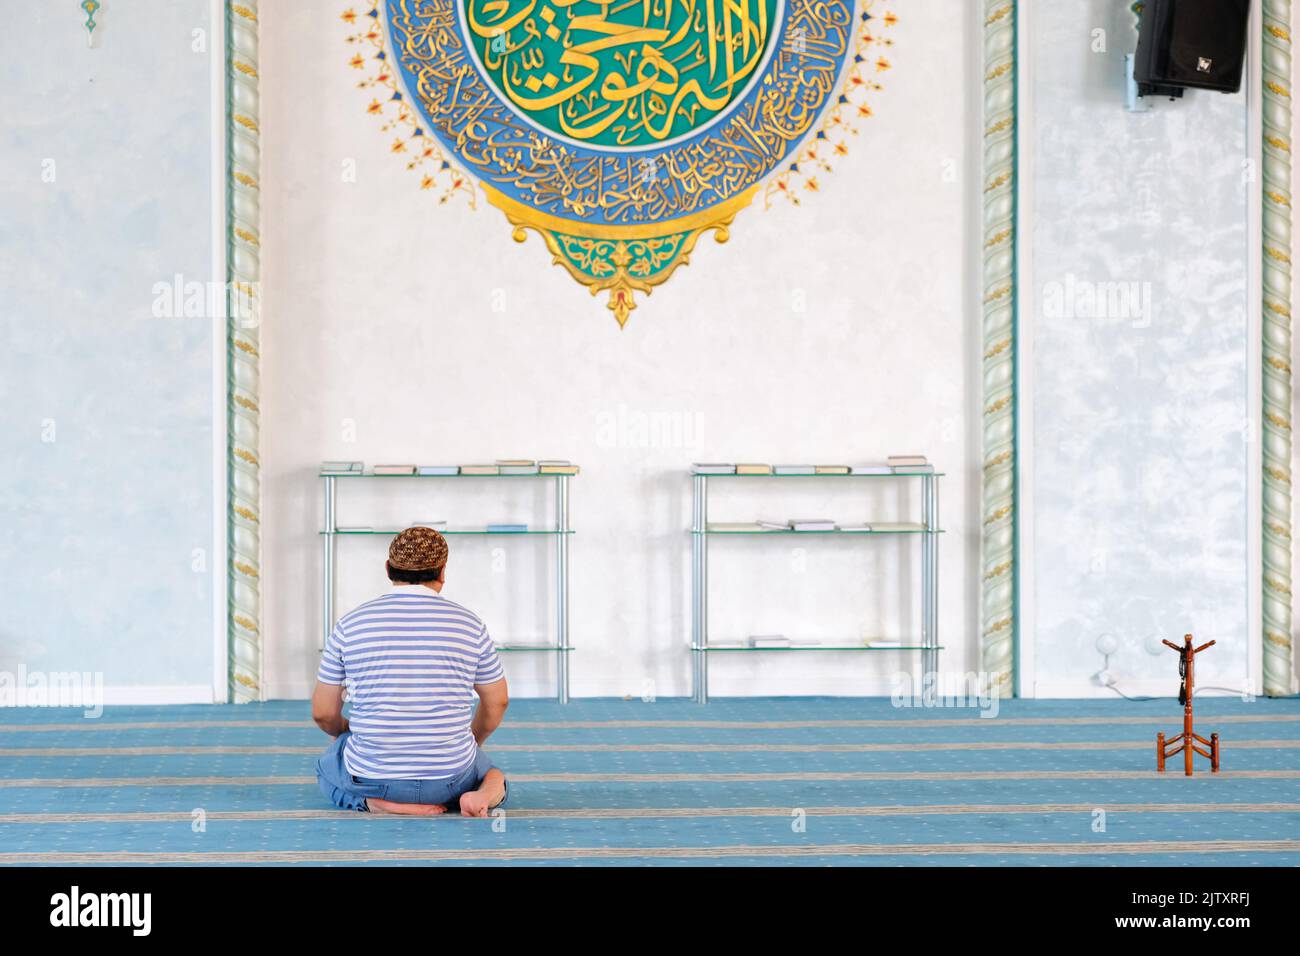 Tashkent Uzbekistán - Un hombre adora en la Mezquita del Imán Hazrat Foto de stock